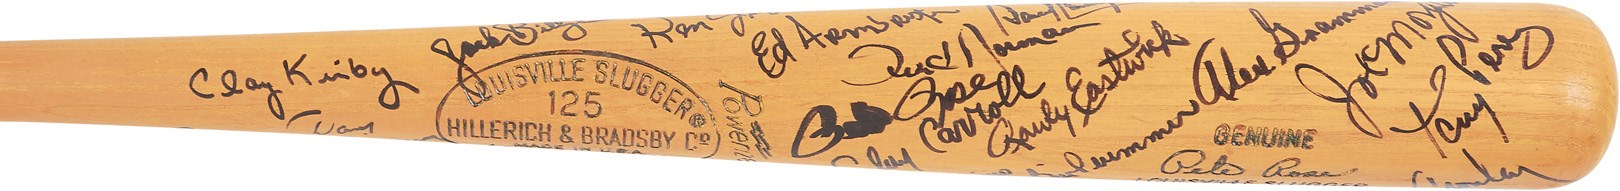 Pete Rose & Cincinnati Reds - 1975 World Champion Cincinnati Reds Team-Signed Pete Rose Game Bat (PSA)